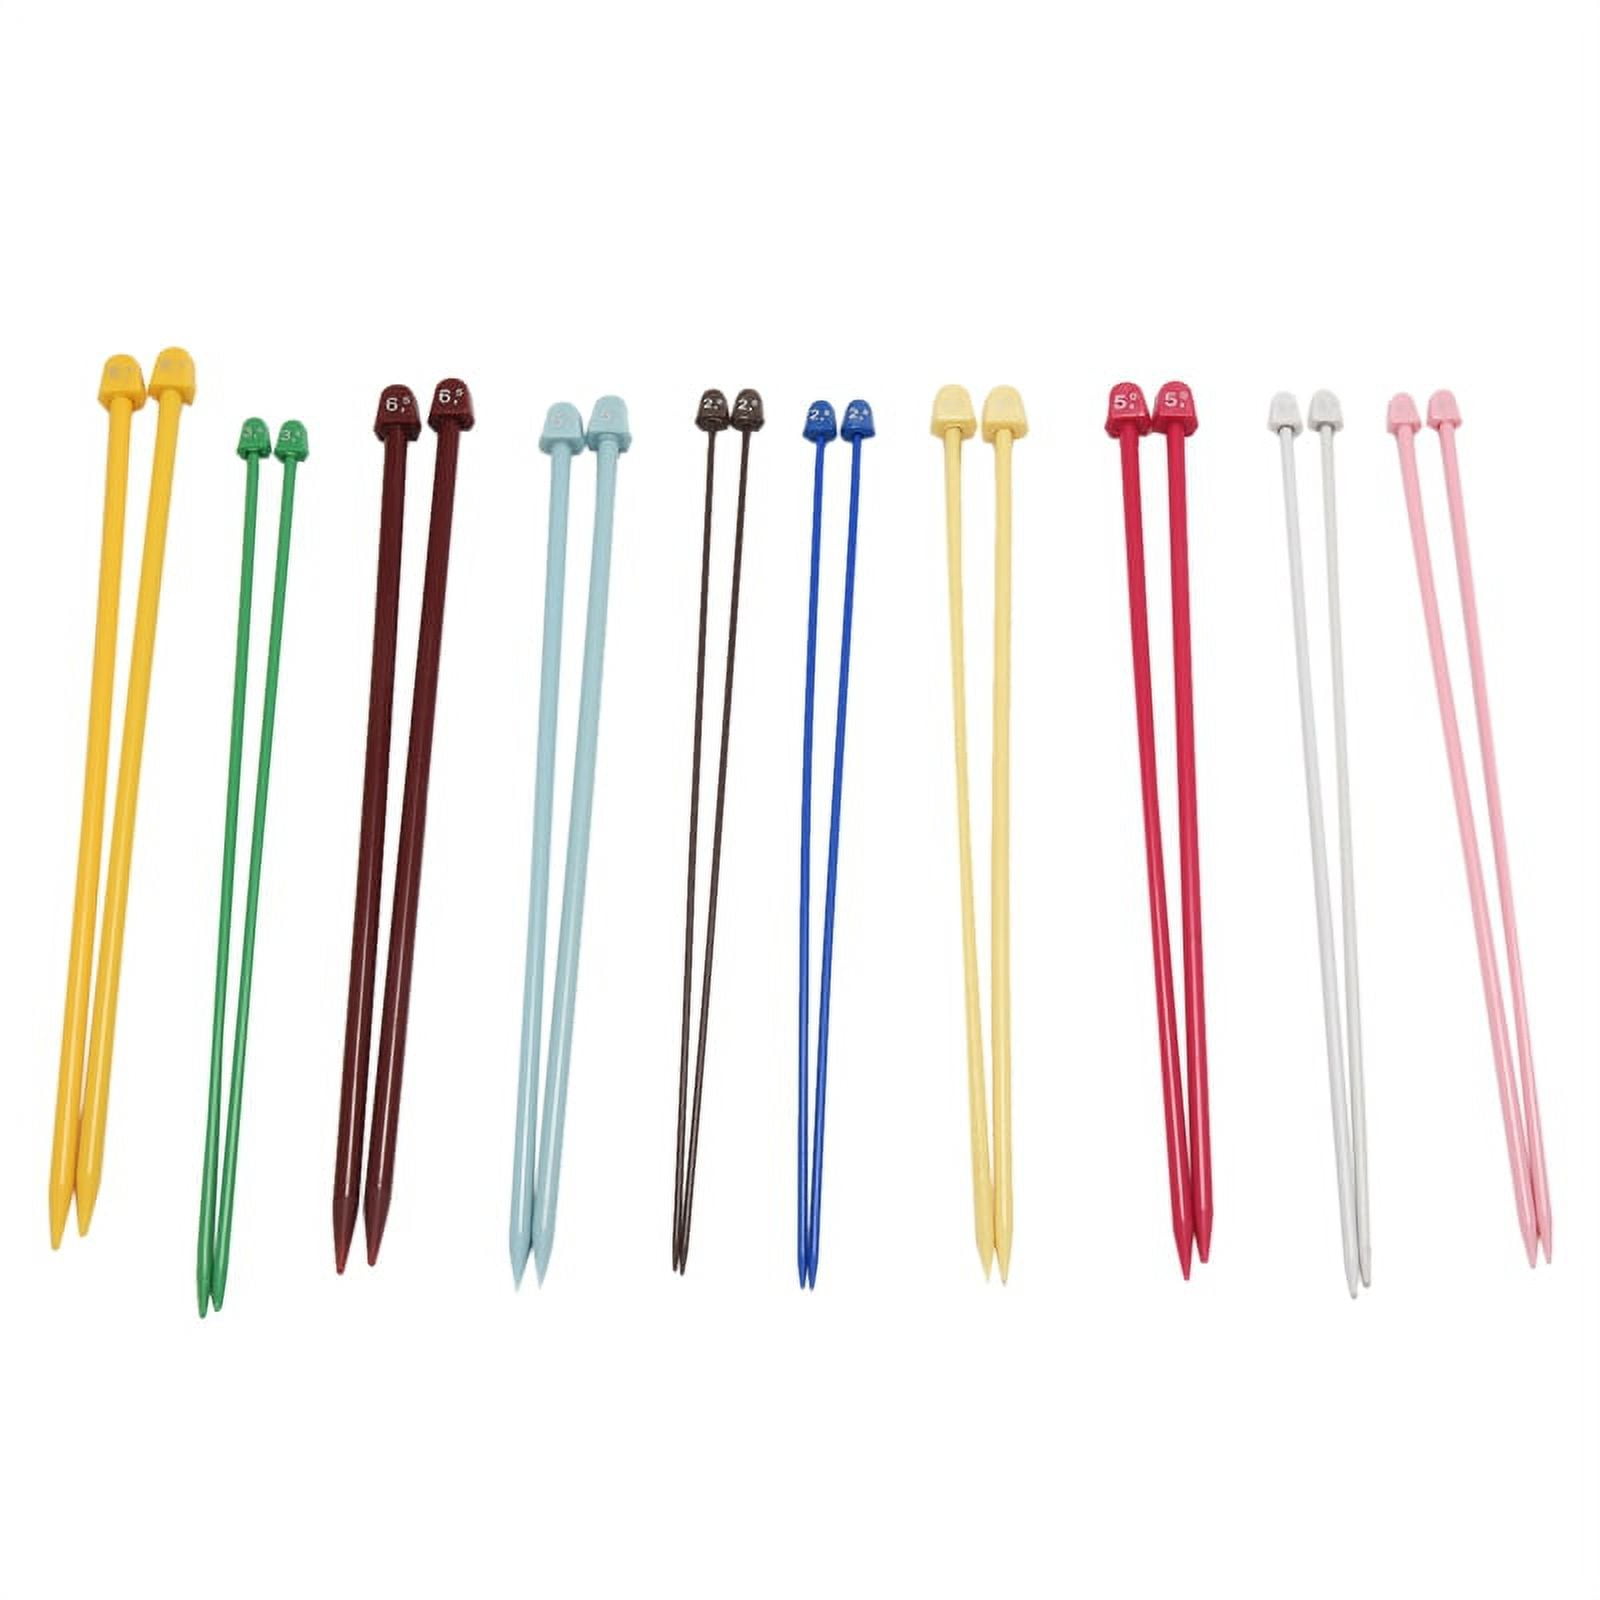 Lot of 2 Allary Style #6235-10 Knitting Needles, Size 10 (6.0mm x 10)